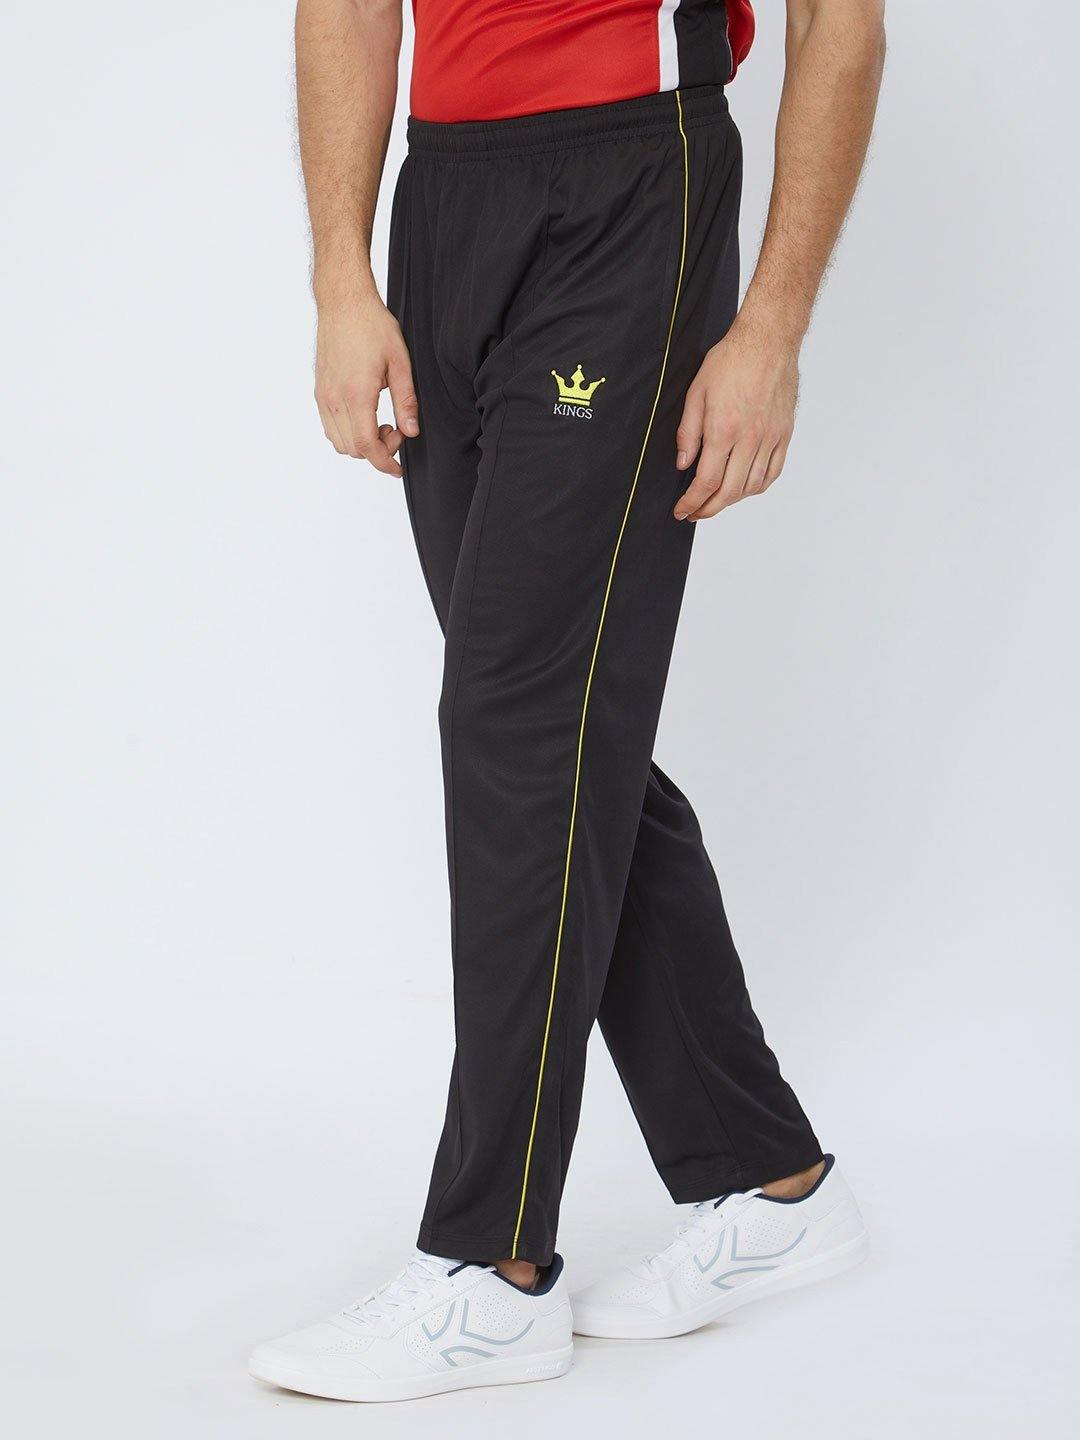 Cricket Cotton Plain Men's Sportswear at Rs 300/piece in